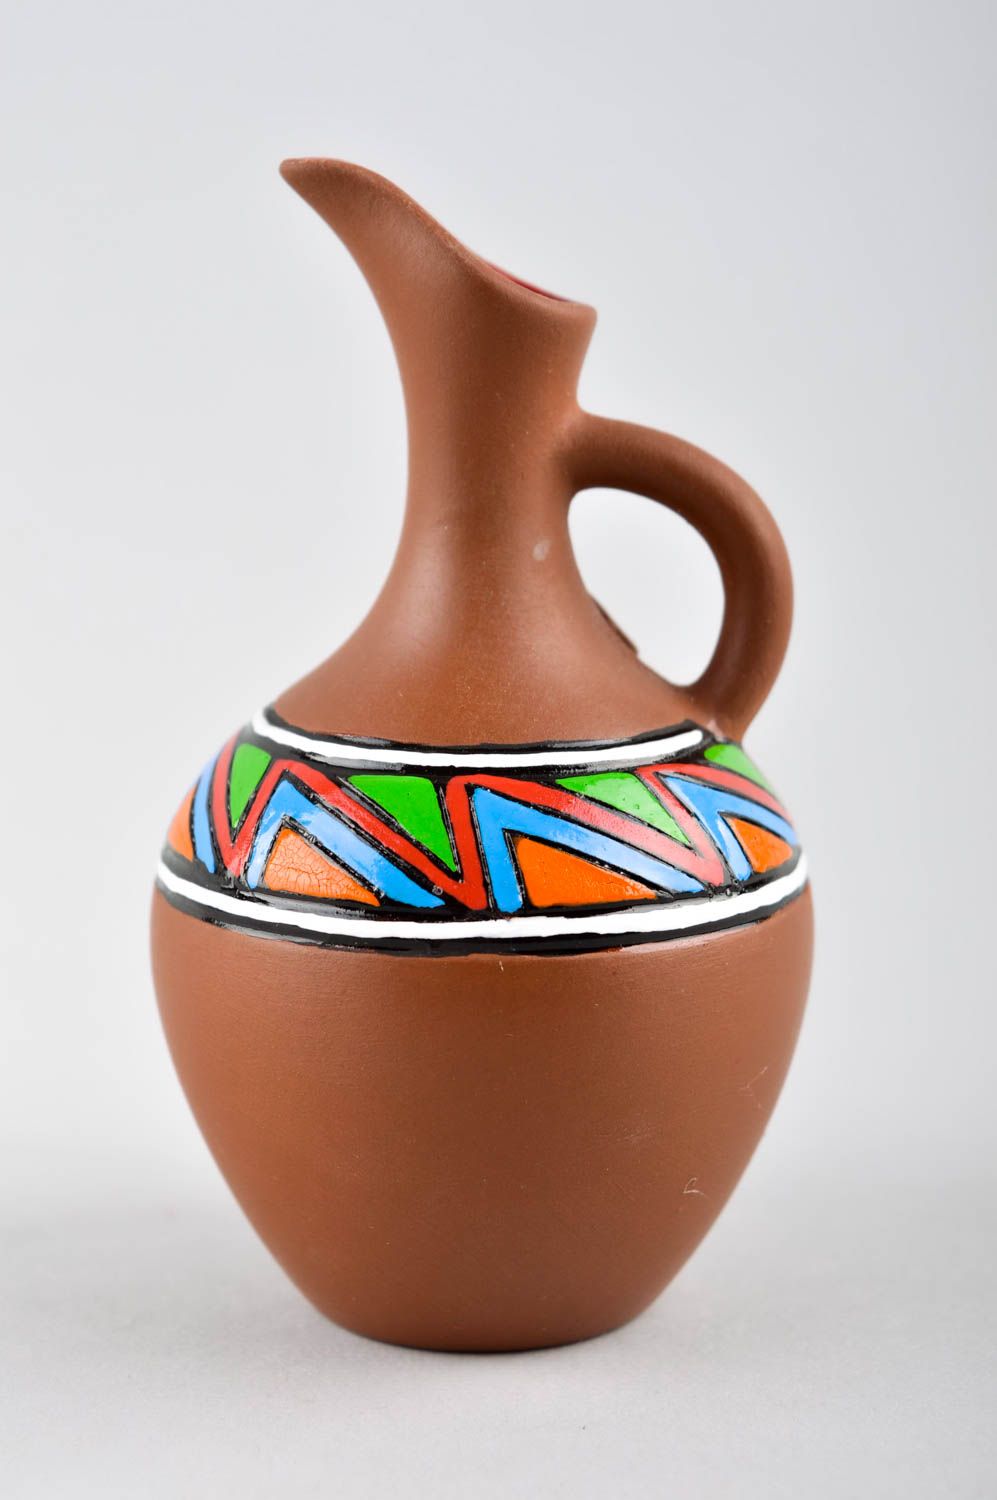 5 oz ceramic handmade wine carafe in terracotta color 0,16 lb photo 2